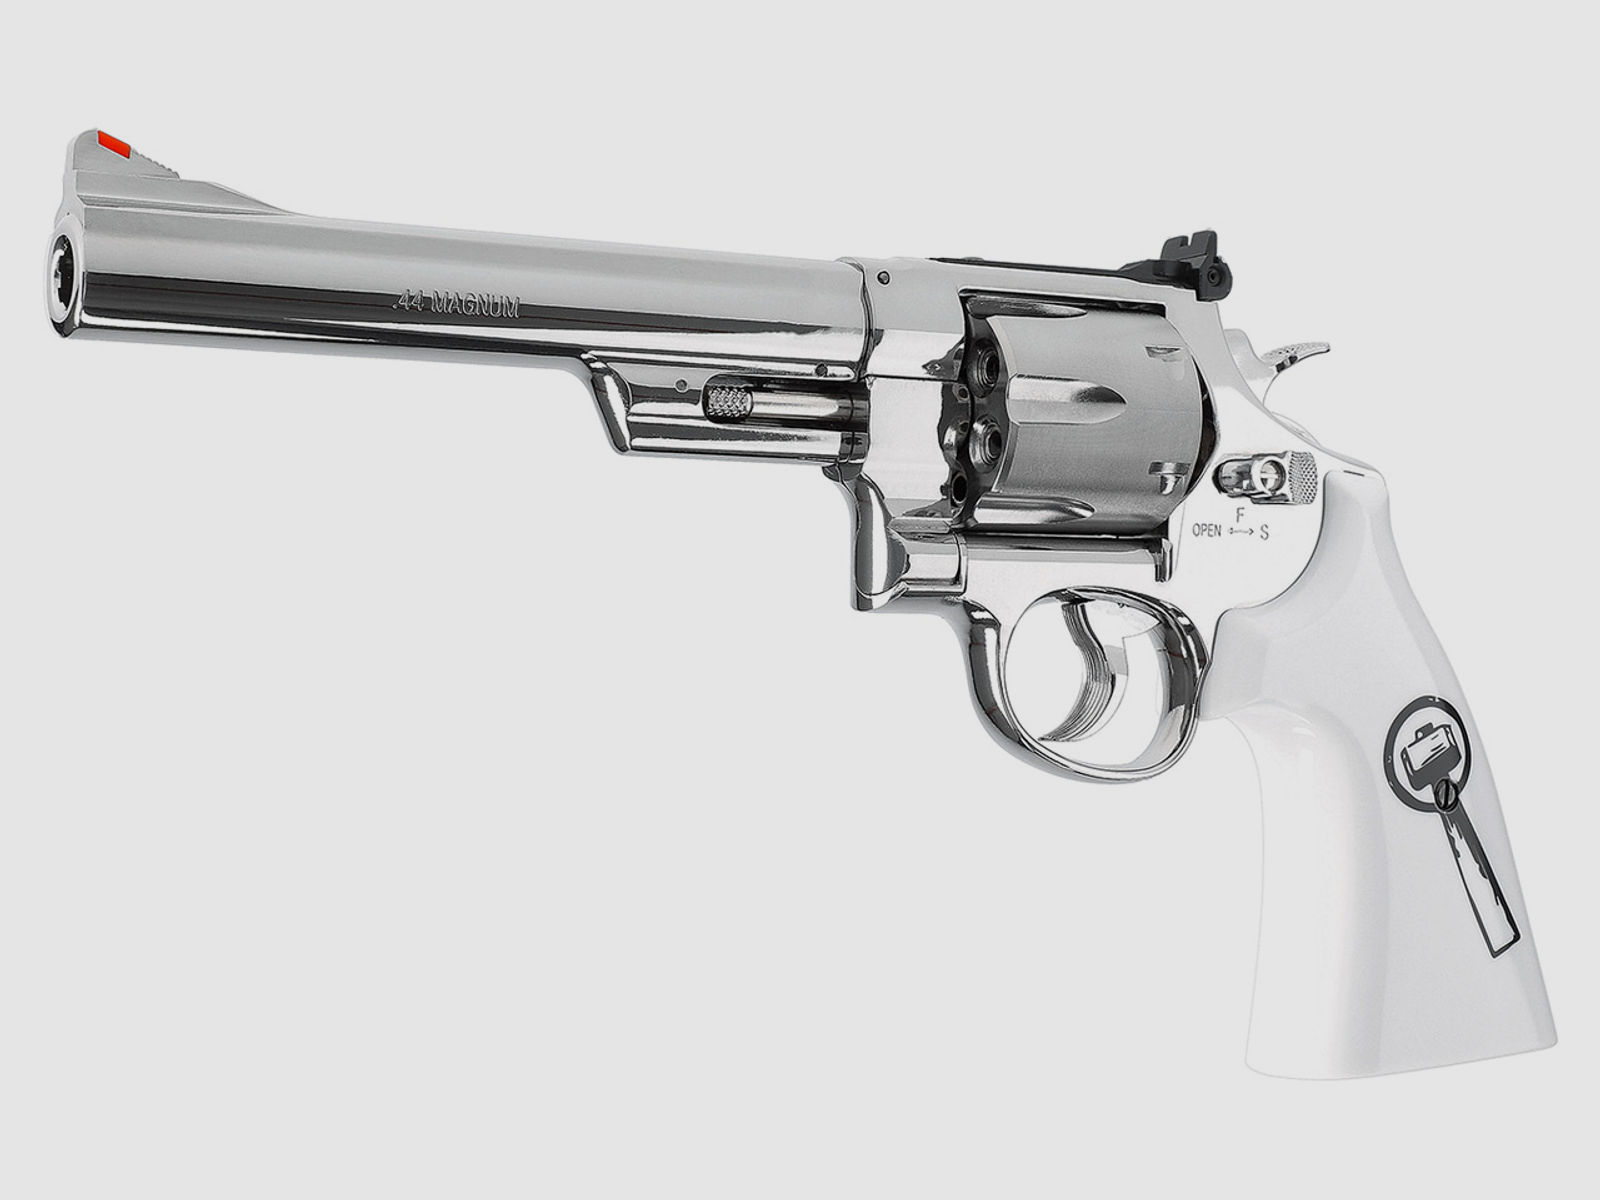 CO2 Softair Revolver Smith & Wesson 629 Trust Me Vollmetall vernickelt weiĂźe Griffschalen Kaliber 6 mm BB (P18)